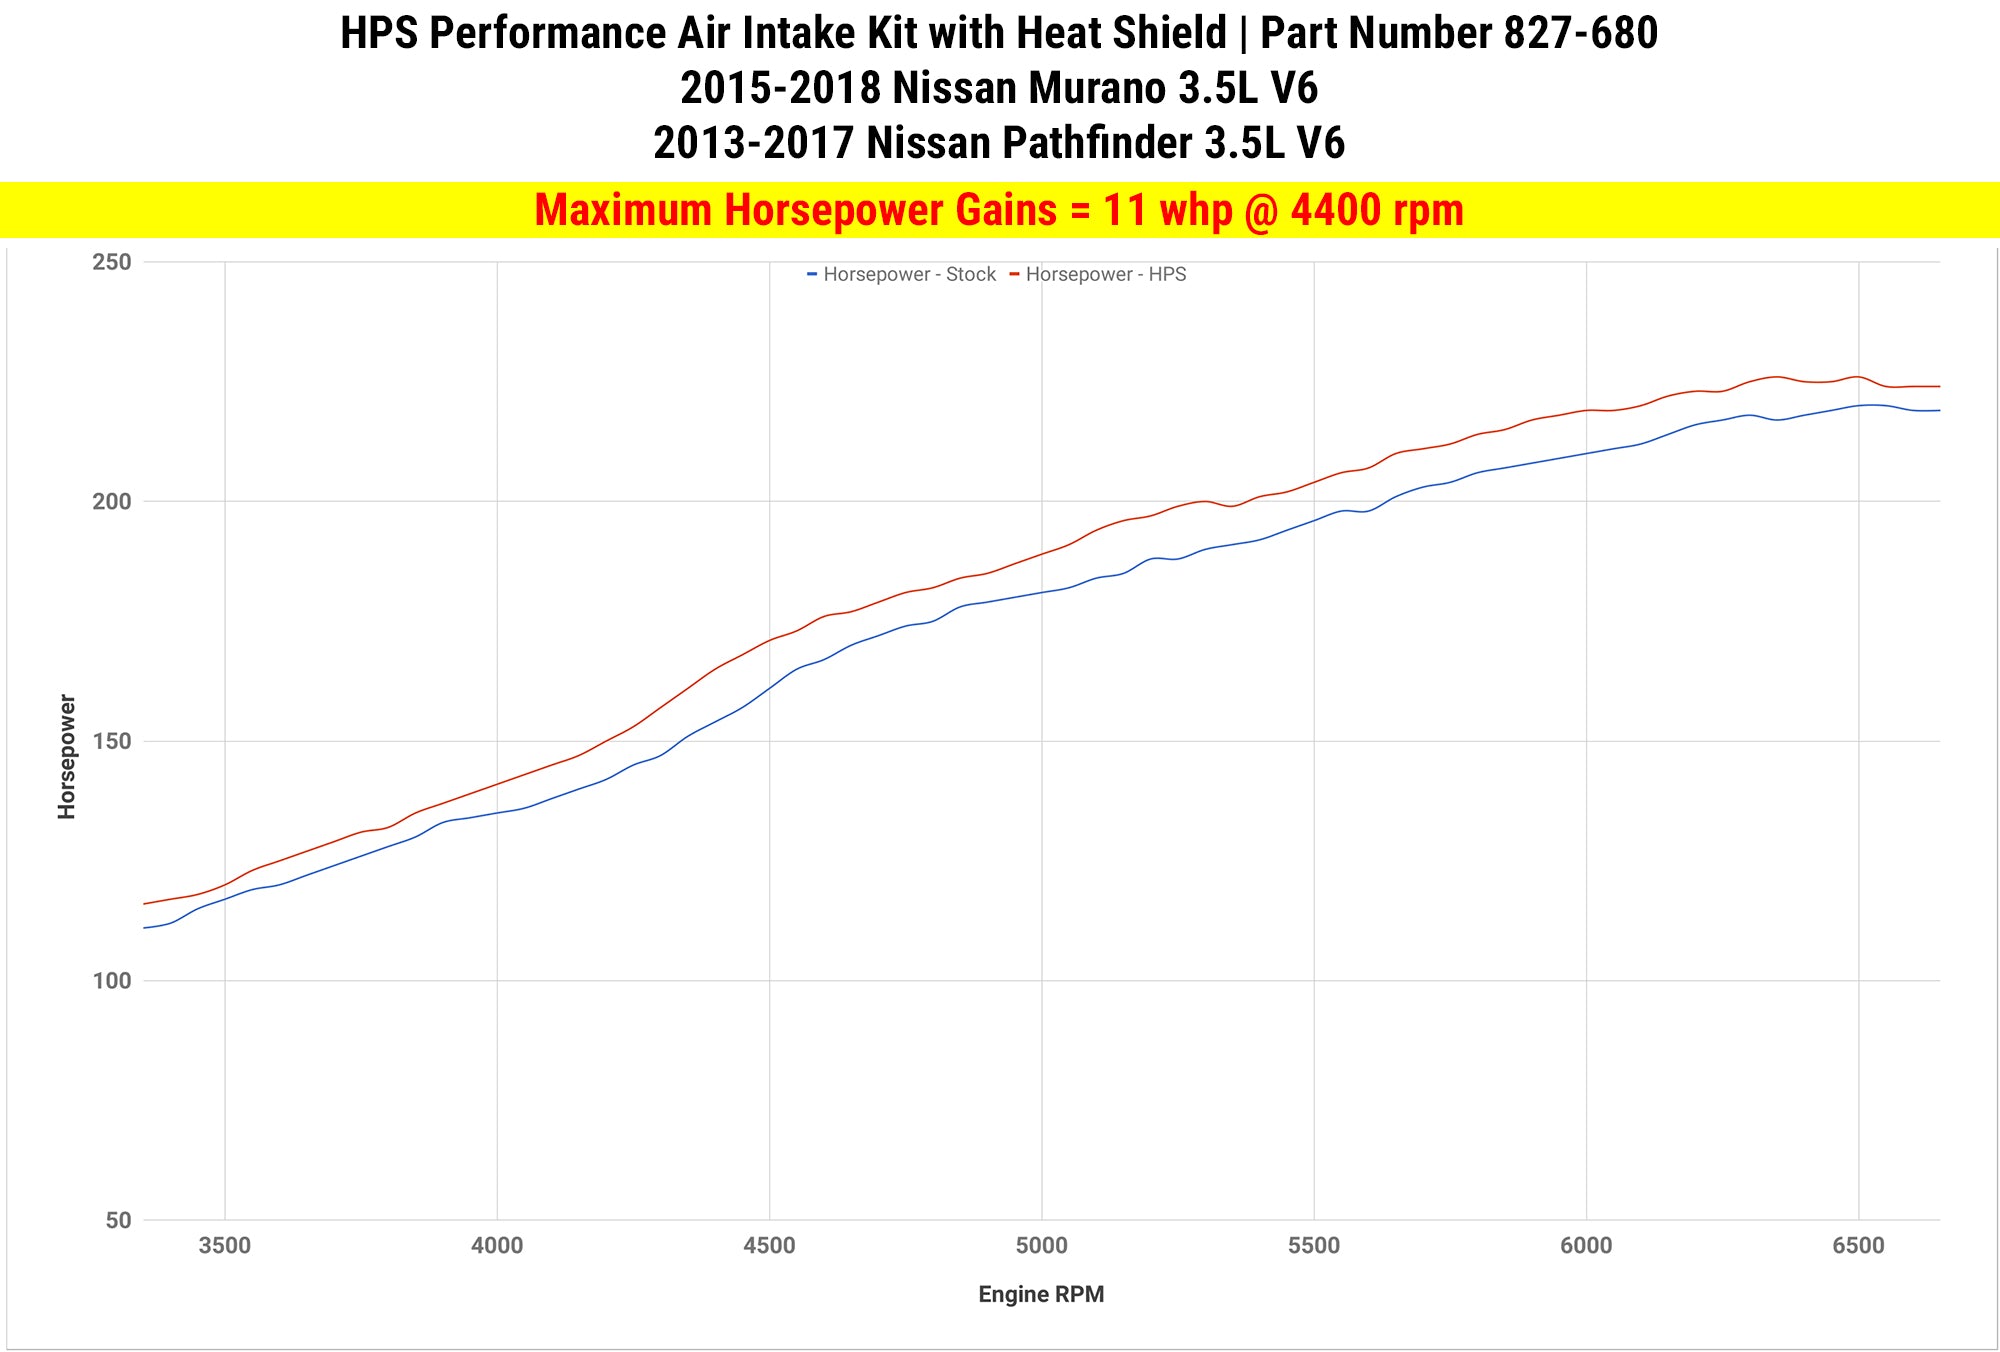 Dyno proven gains 11 whp HPS Performance Shortram Air Intake Kit 2013-2017 Nissan Pathfinder 3.5L V6 827-680P